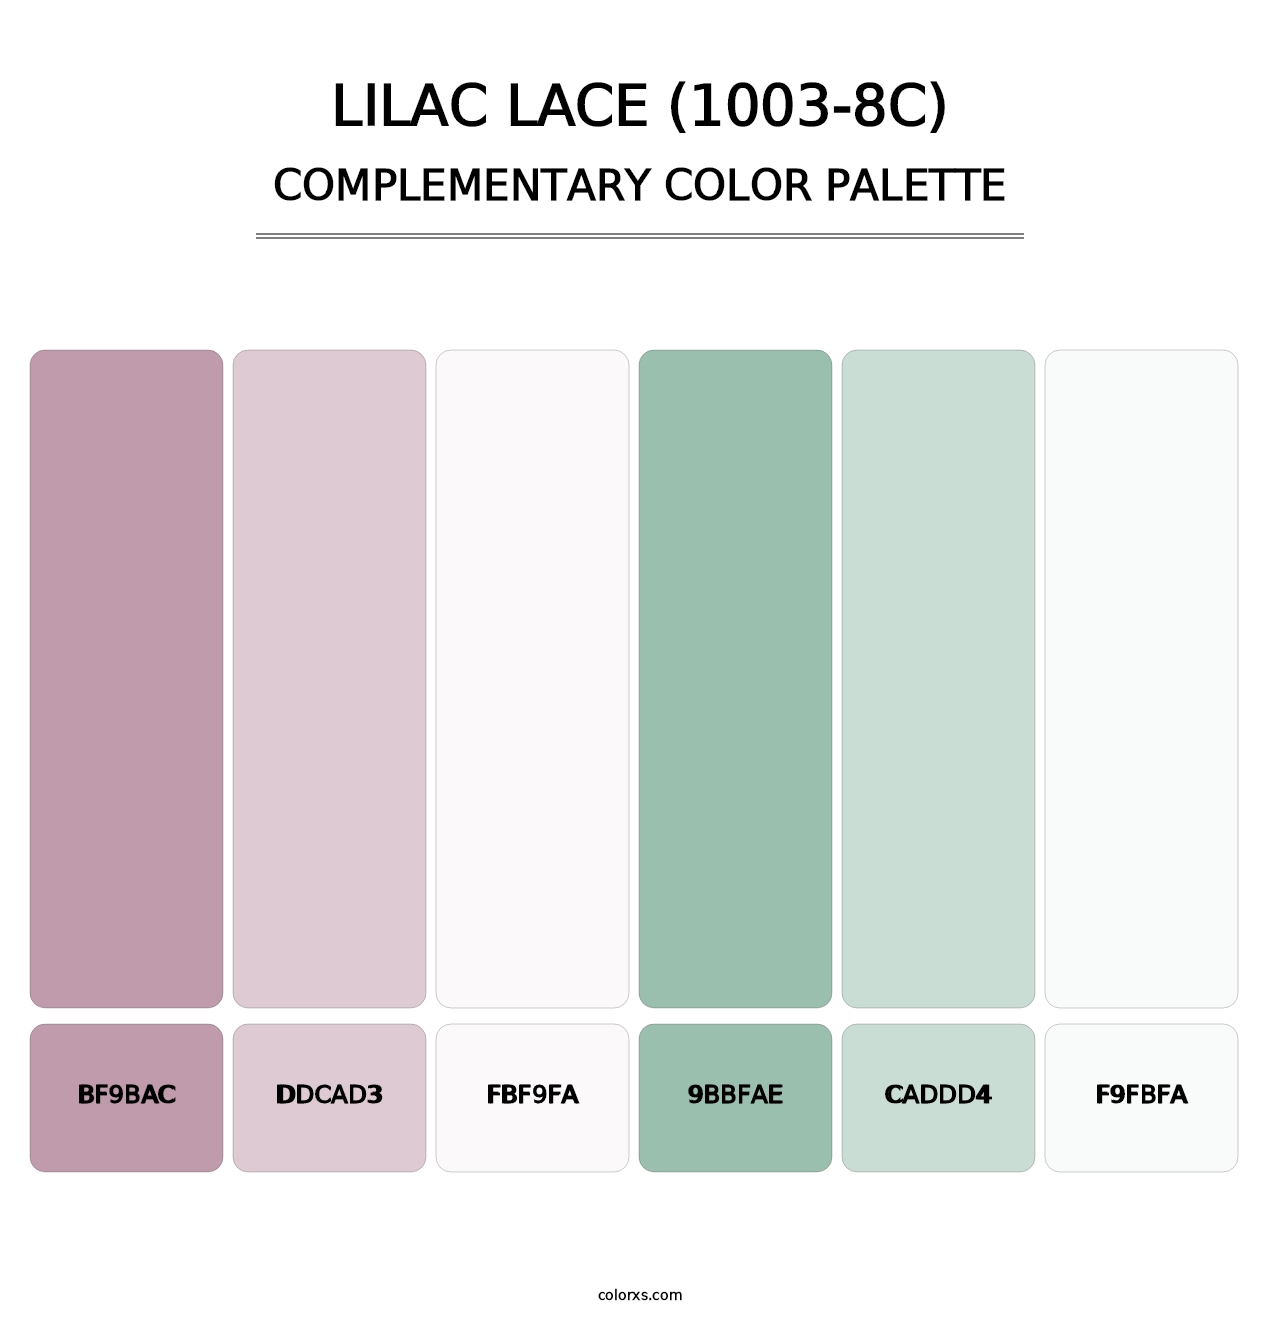 Lilac Lace (1003-8C) - Complementary Color Palette